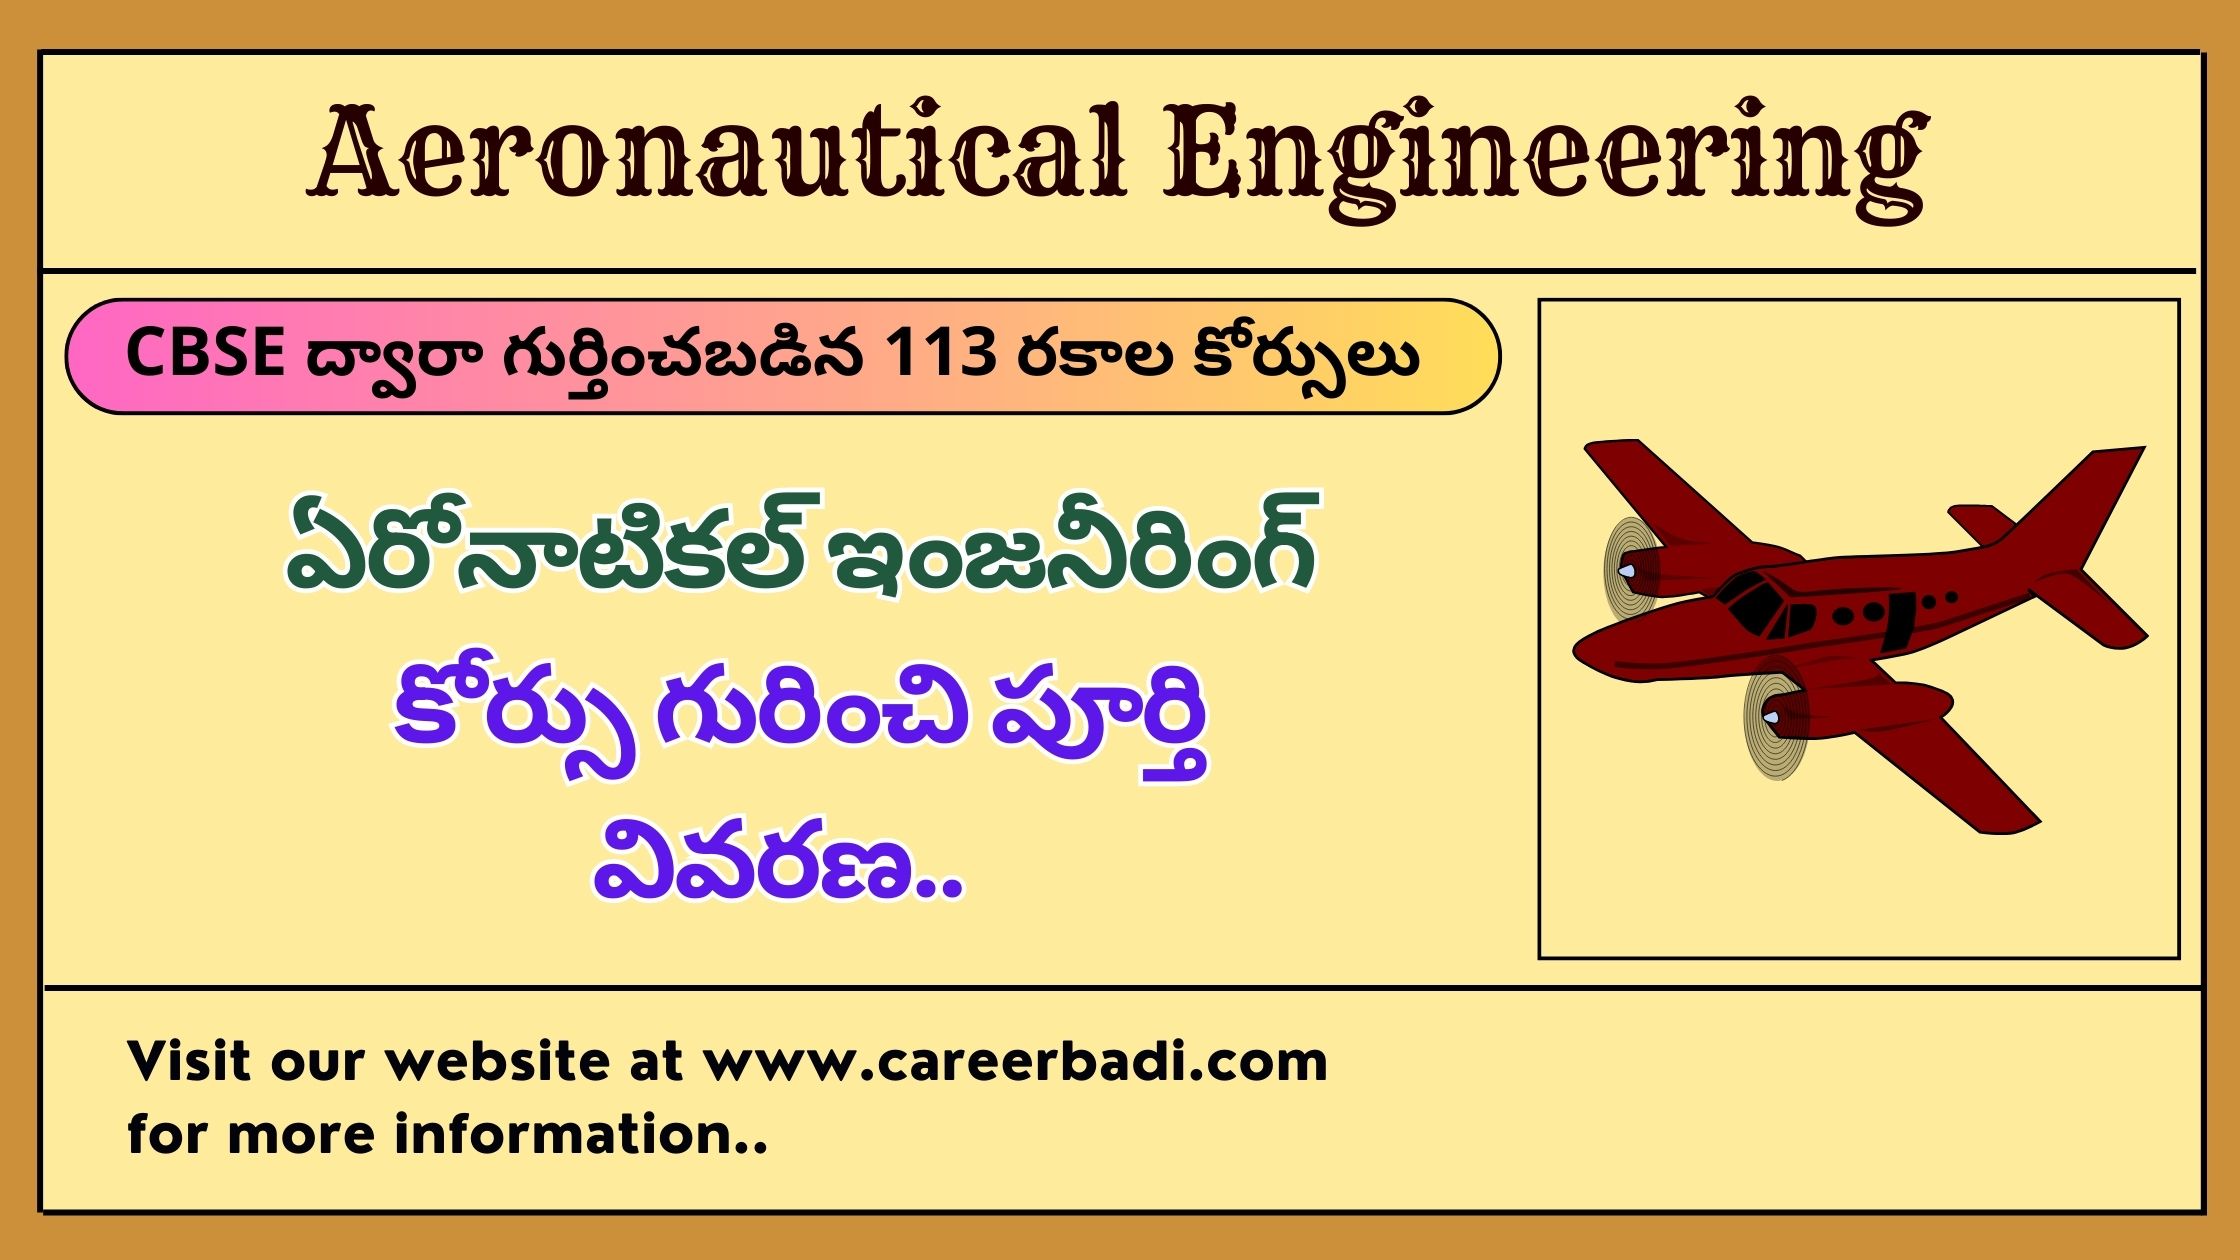 Aeronautical Engineering Course Details in Telugu